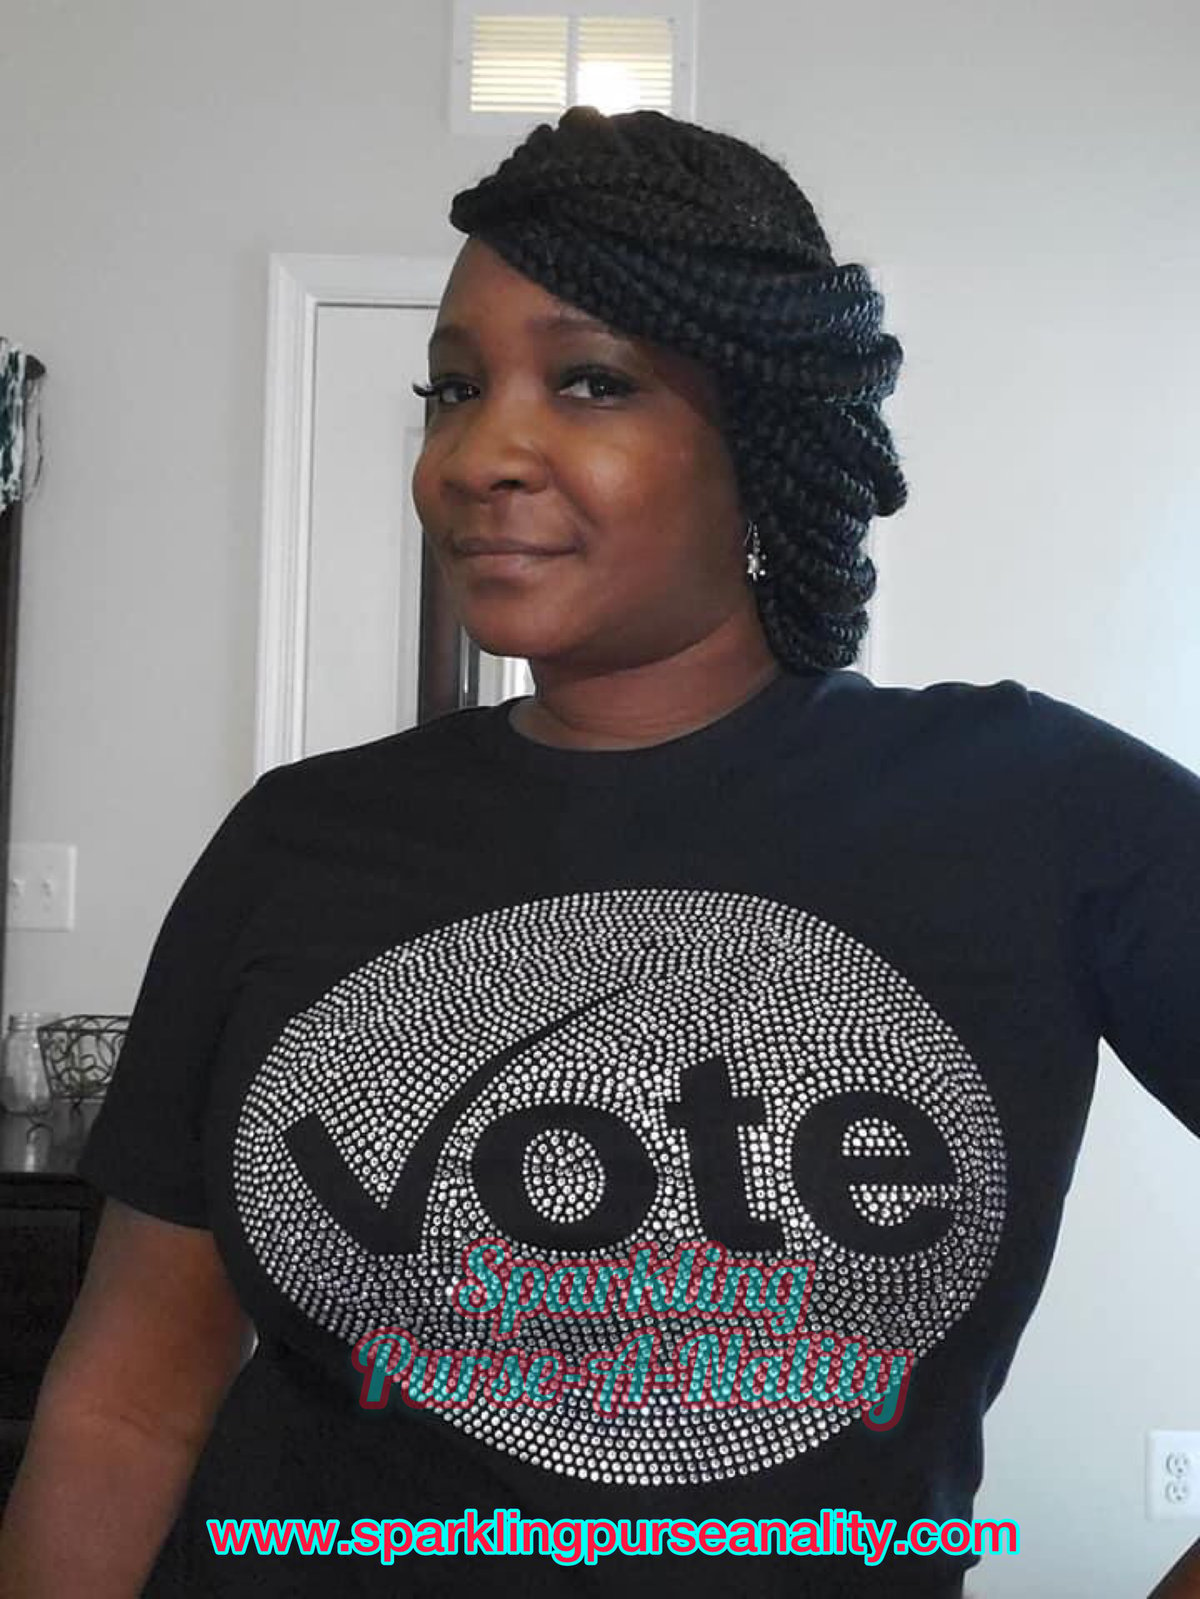 Image of "Sparkling" VOTE shirt